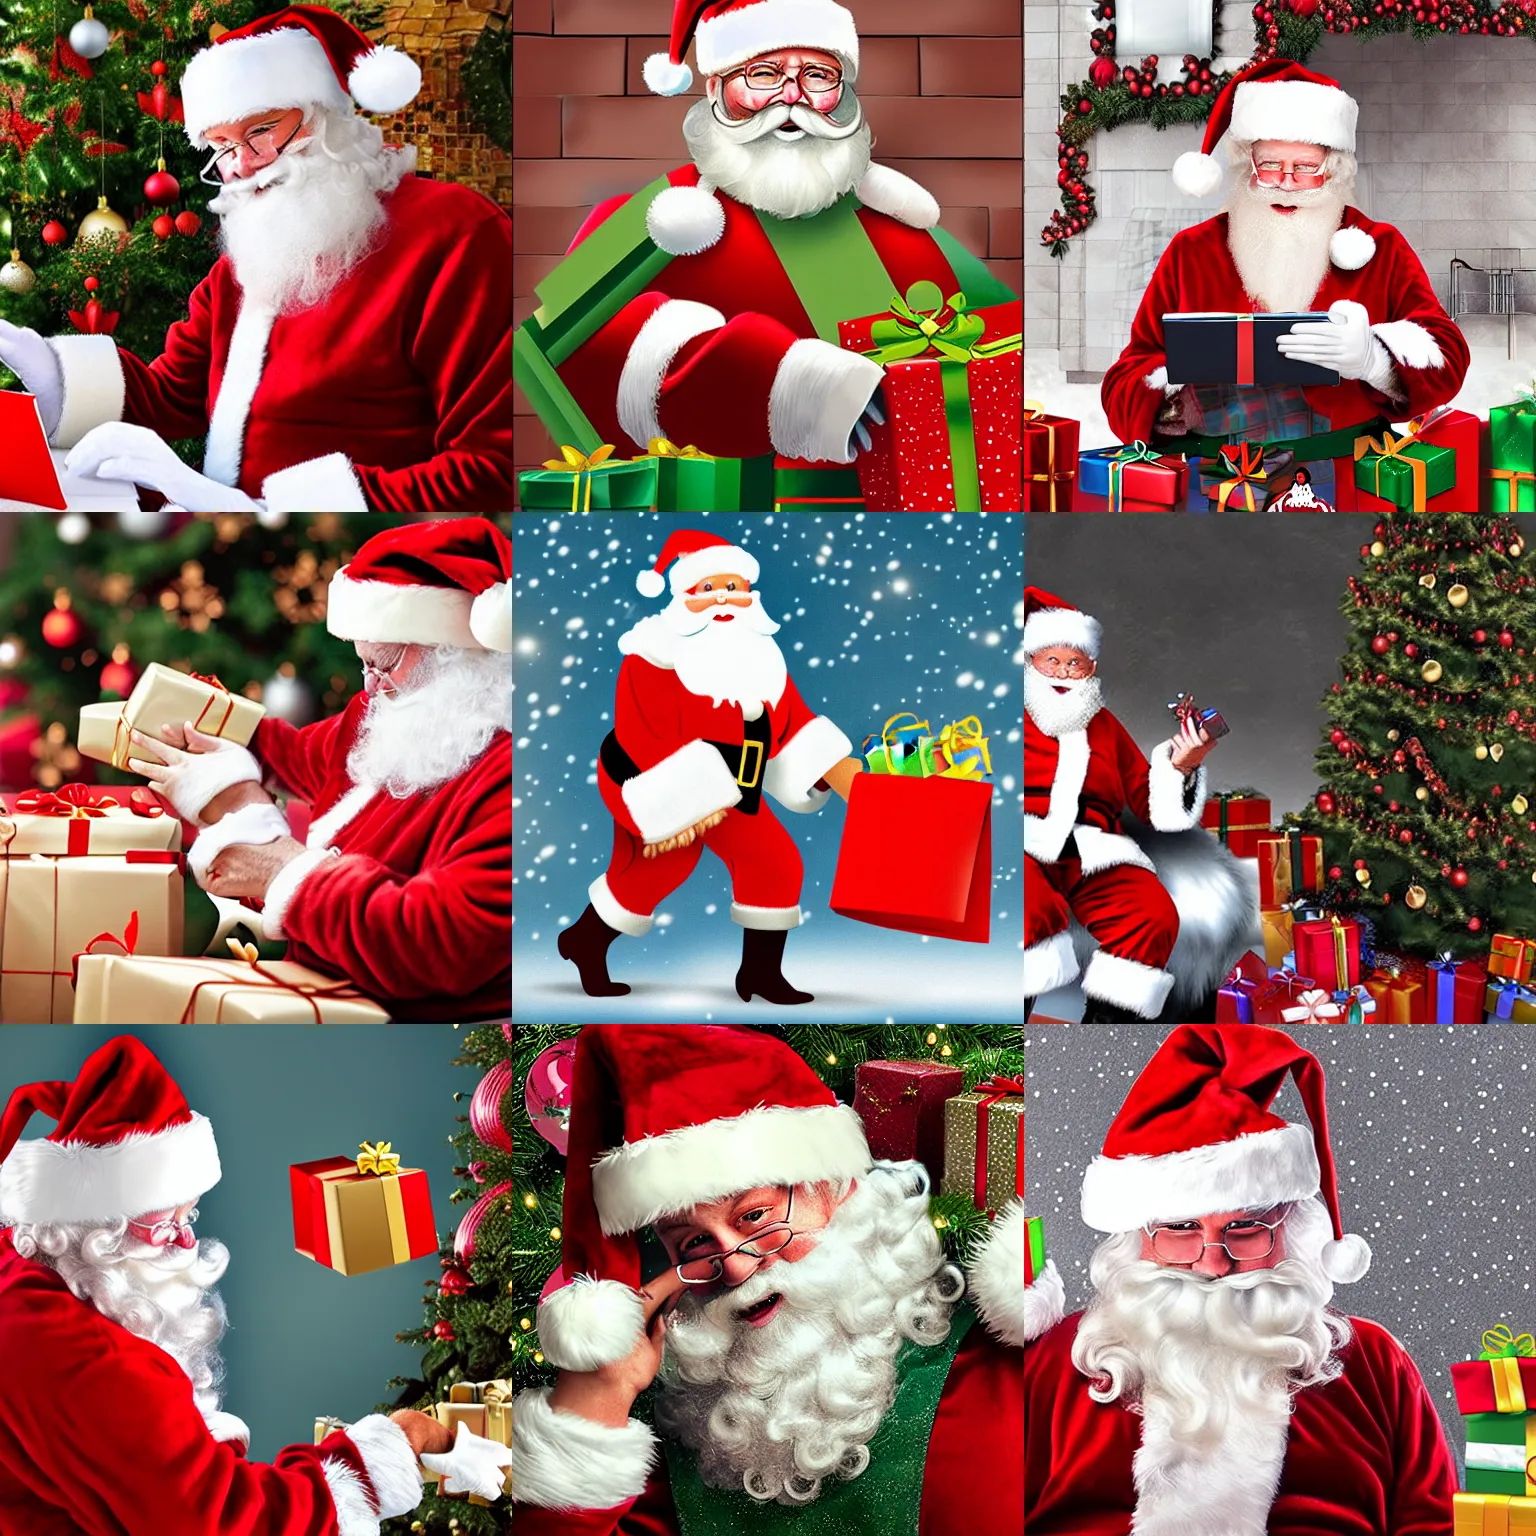 Prompt: Santa doing last-minute Christmas shopping on Amazon, very beautiful digital art